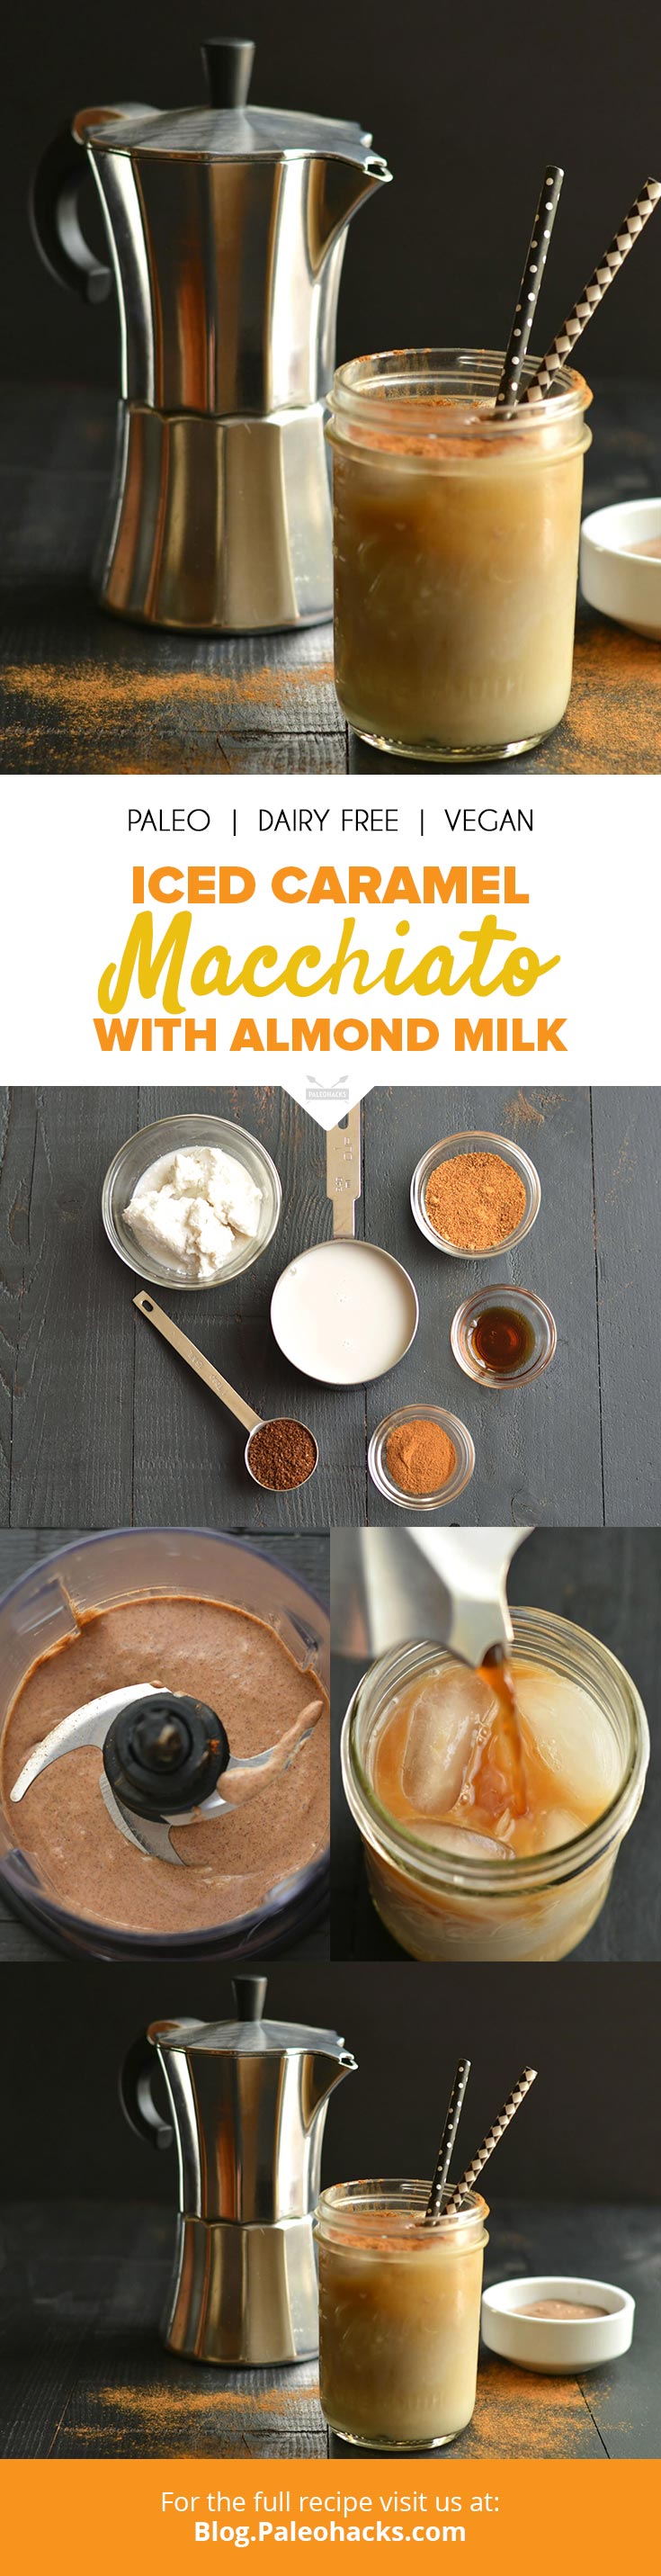 How to Make an Iced Cinnamon Caramel Macchiato